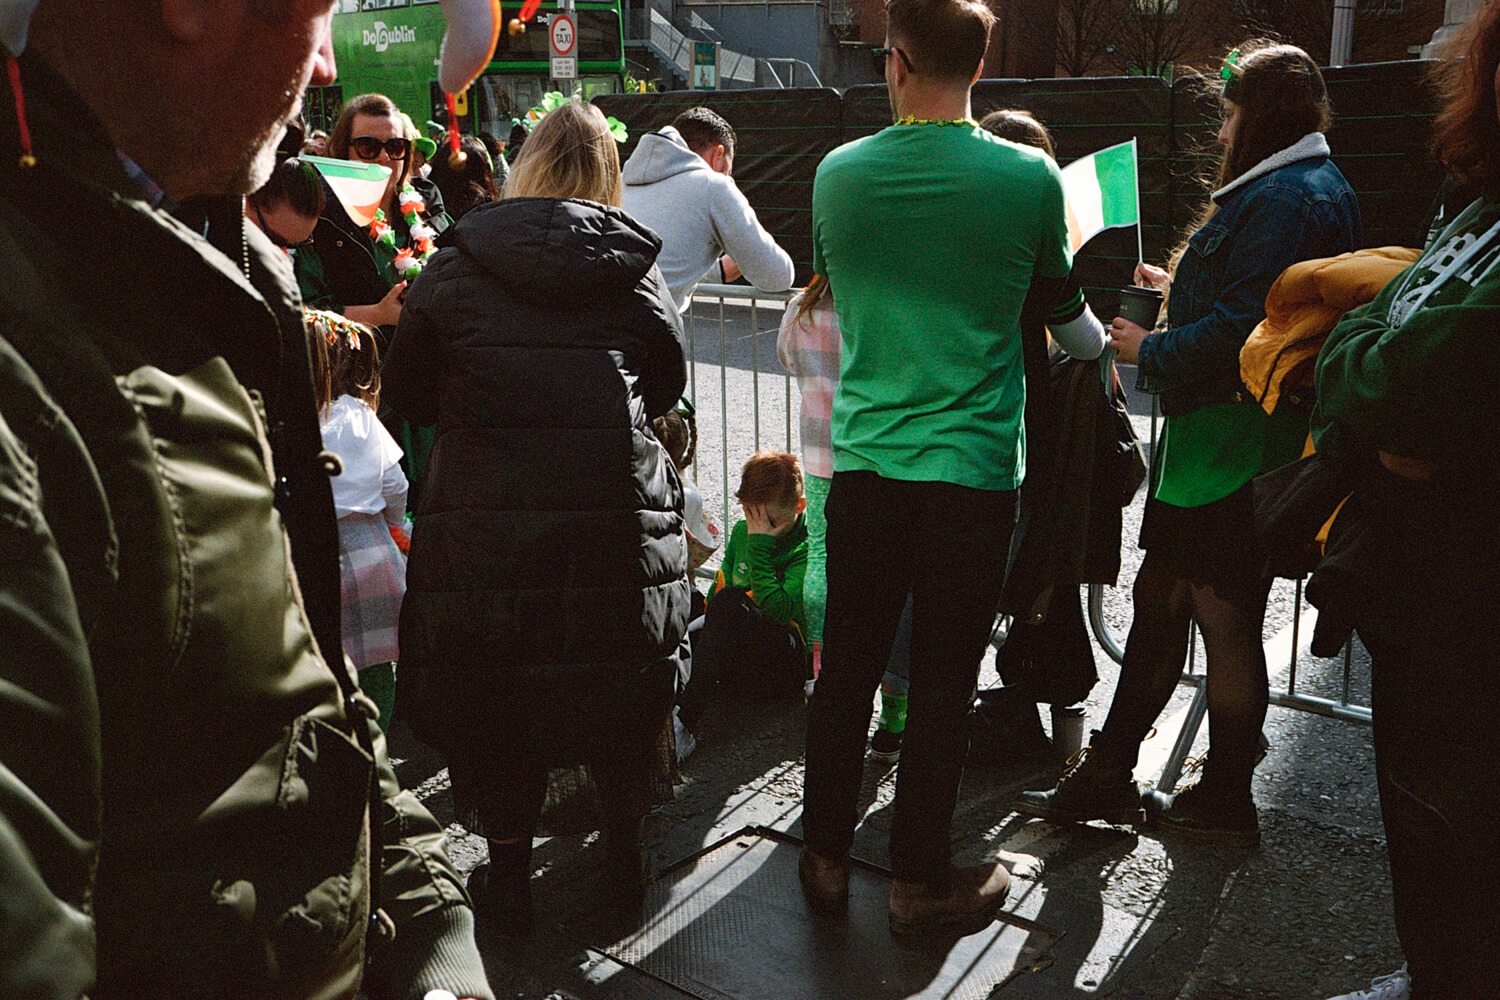 5 Frames... Of Dublin's St Patrick's Day on Adox Color Mission 200 (35mm Format / EI 200 / Leica M6 + Voigtlander 35mm f/2.5 Color Skopar) - by Valentine de Villemeur